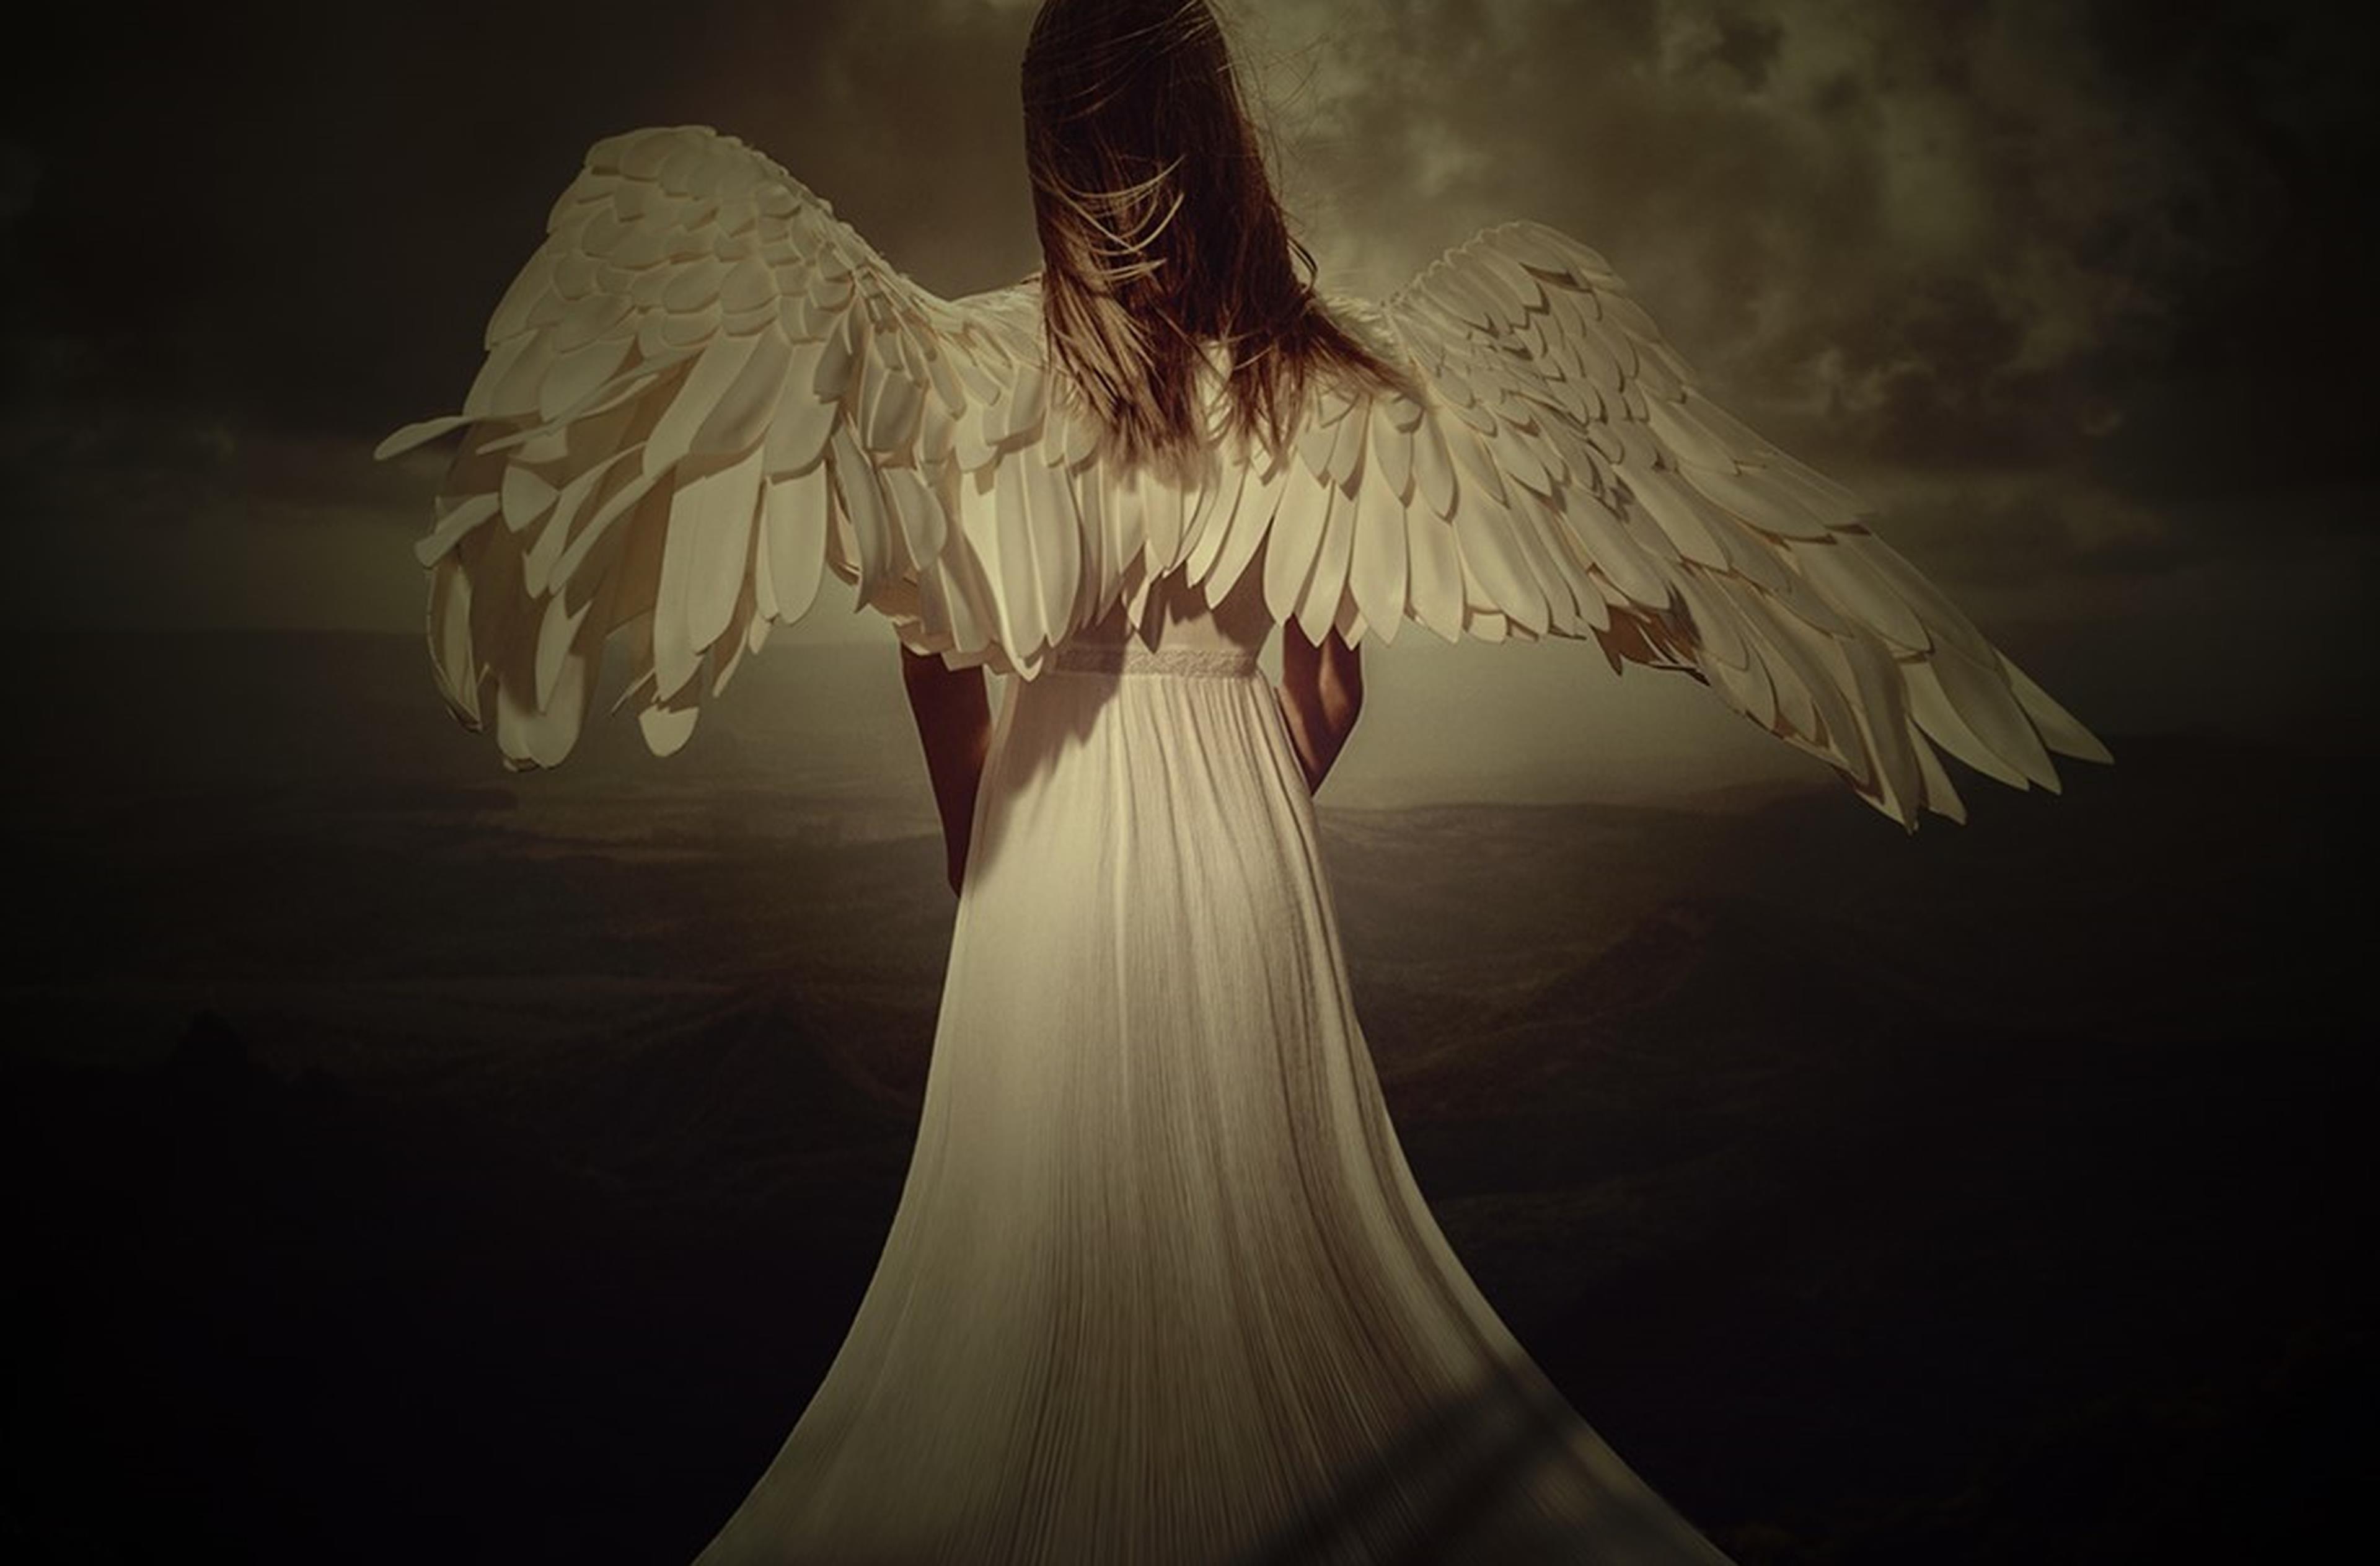 Immagine di copertina per angelo custode frasi